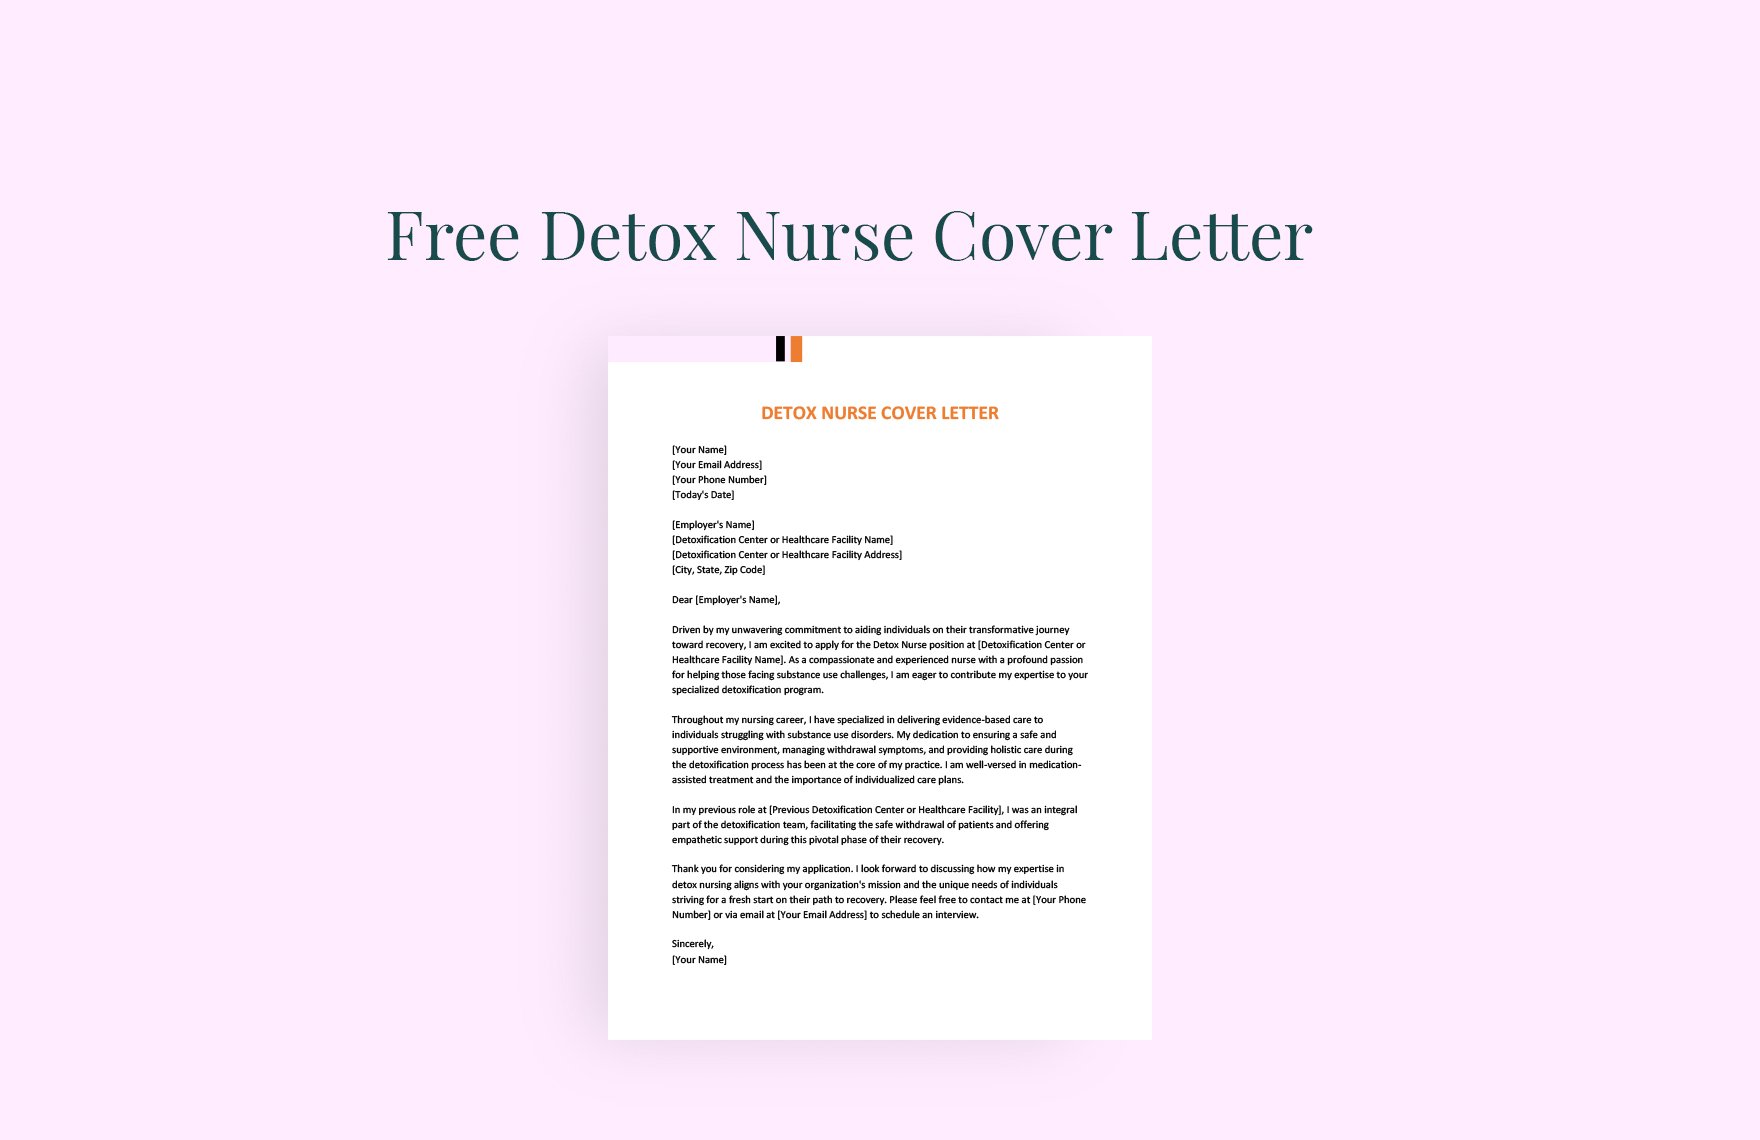 Detox Nurse Cover Letter in Word, Google Docs